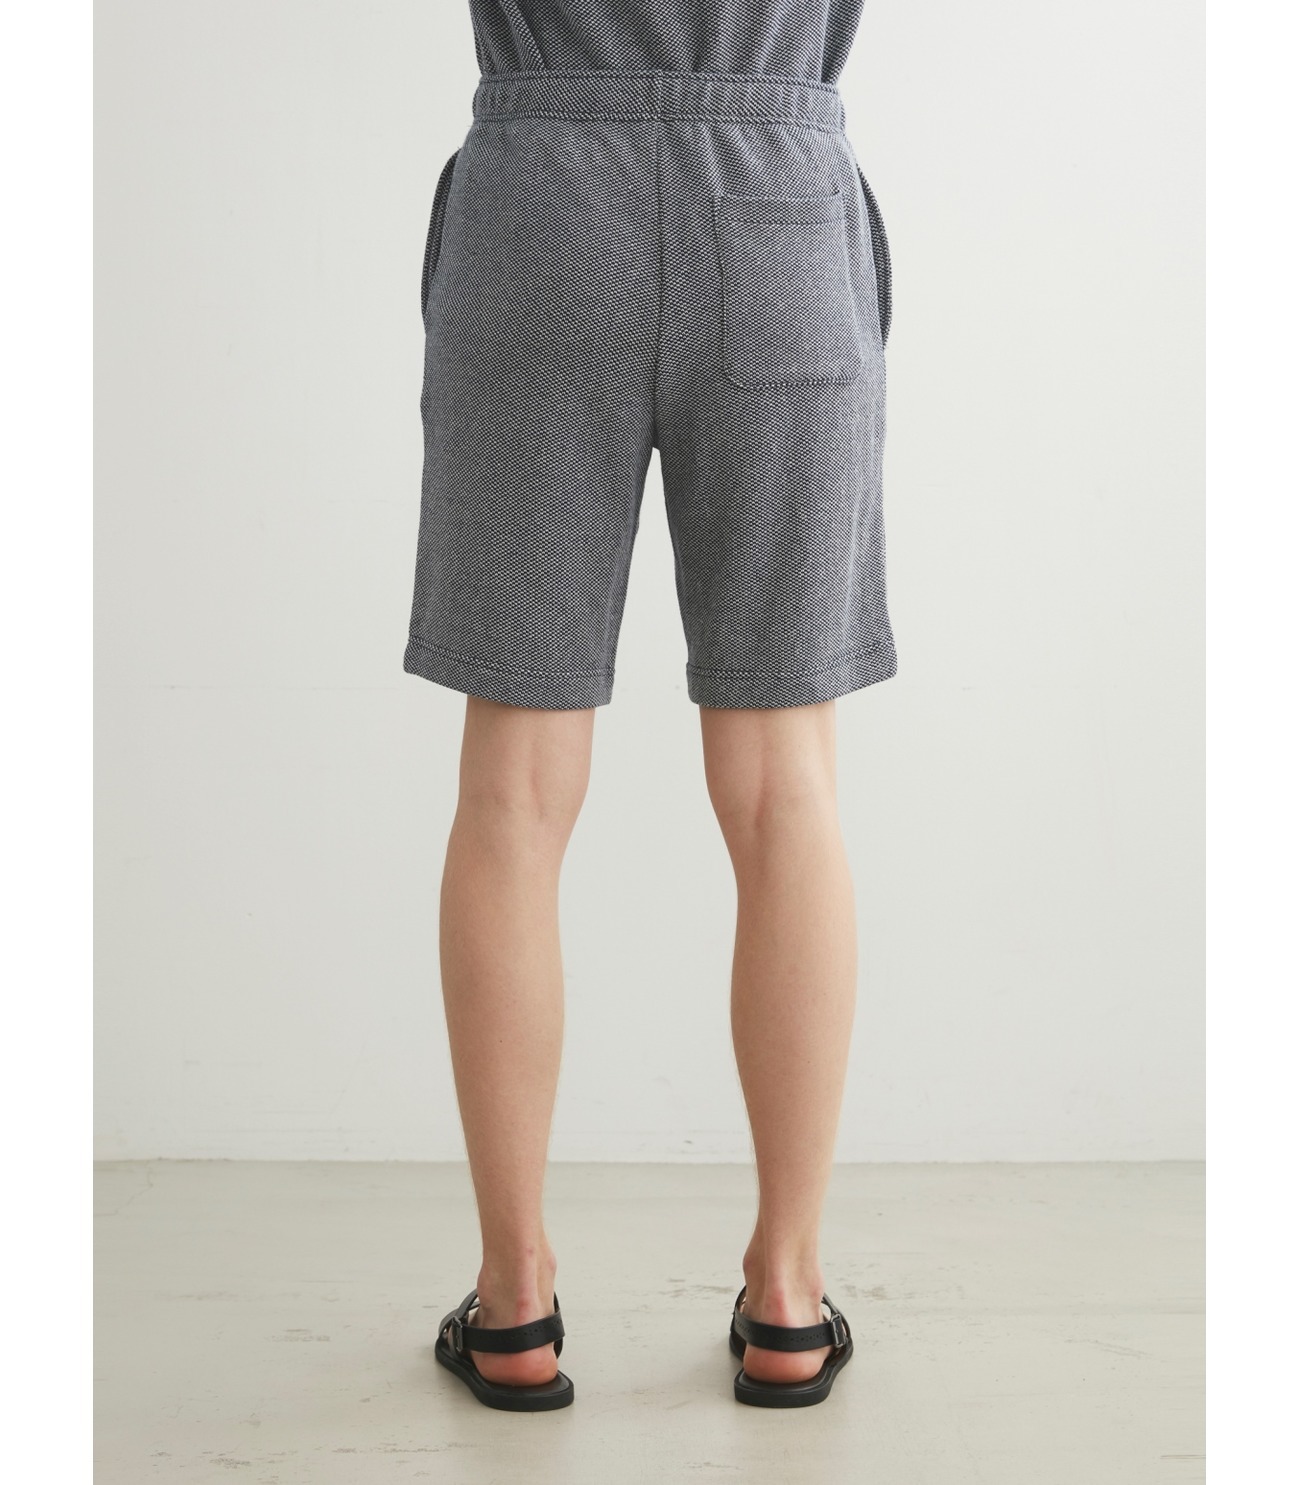 Men's inlay shorts 詳細画像 grey 11